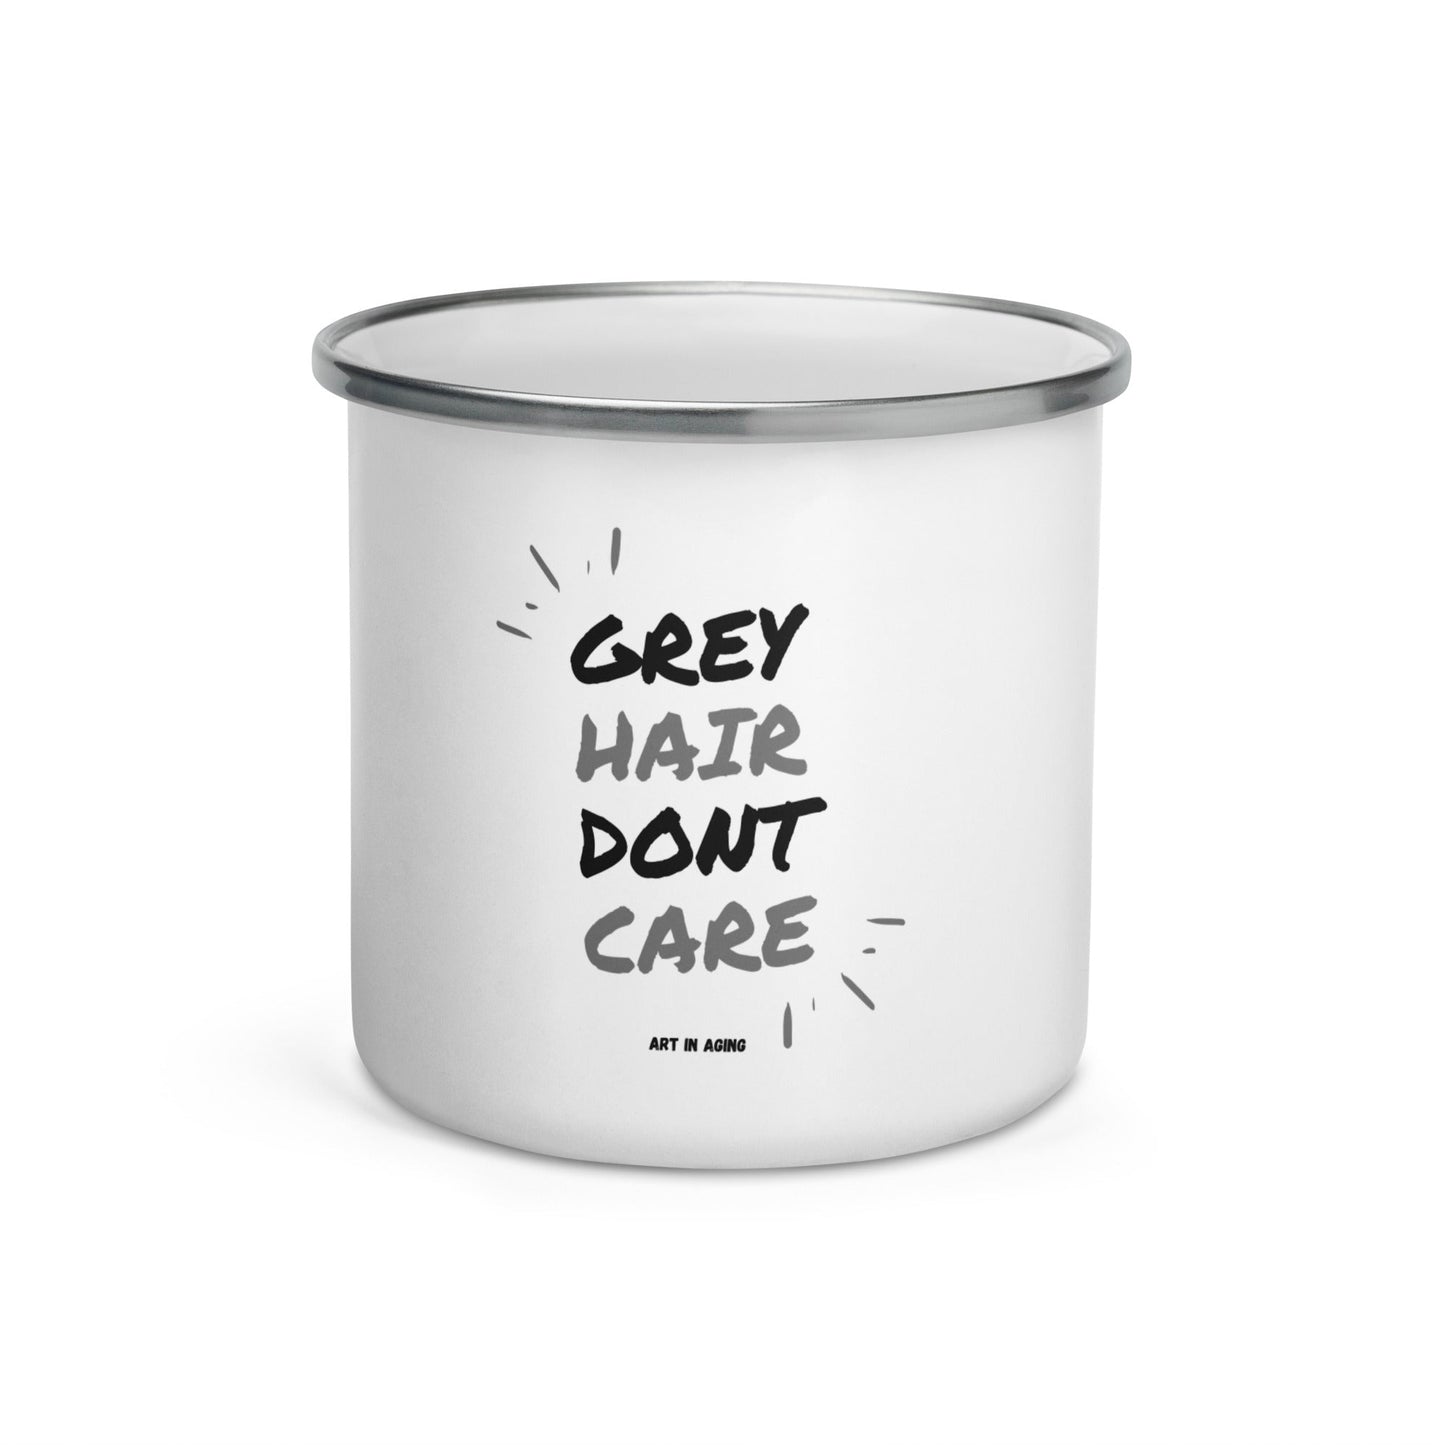 Grey Hair Don't Care Coffee Mug | Art in Aging